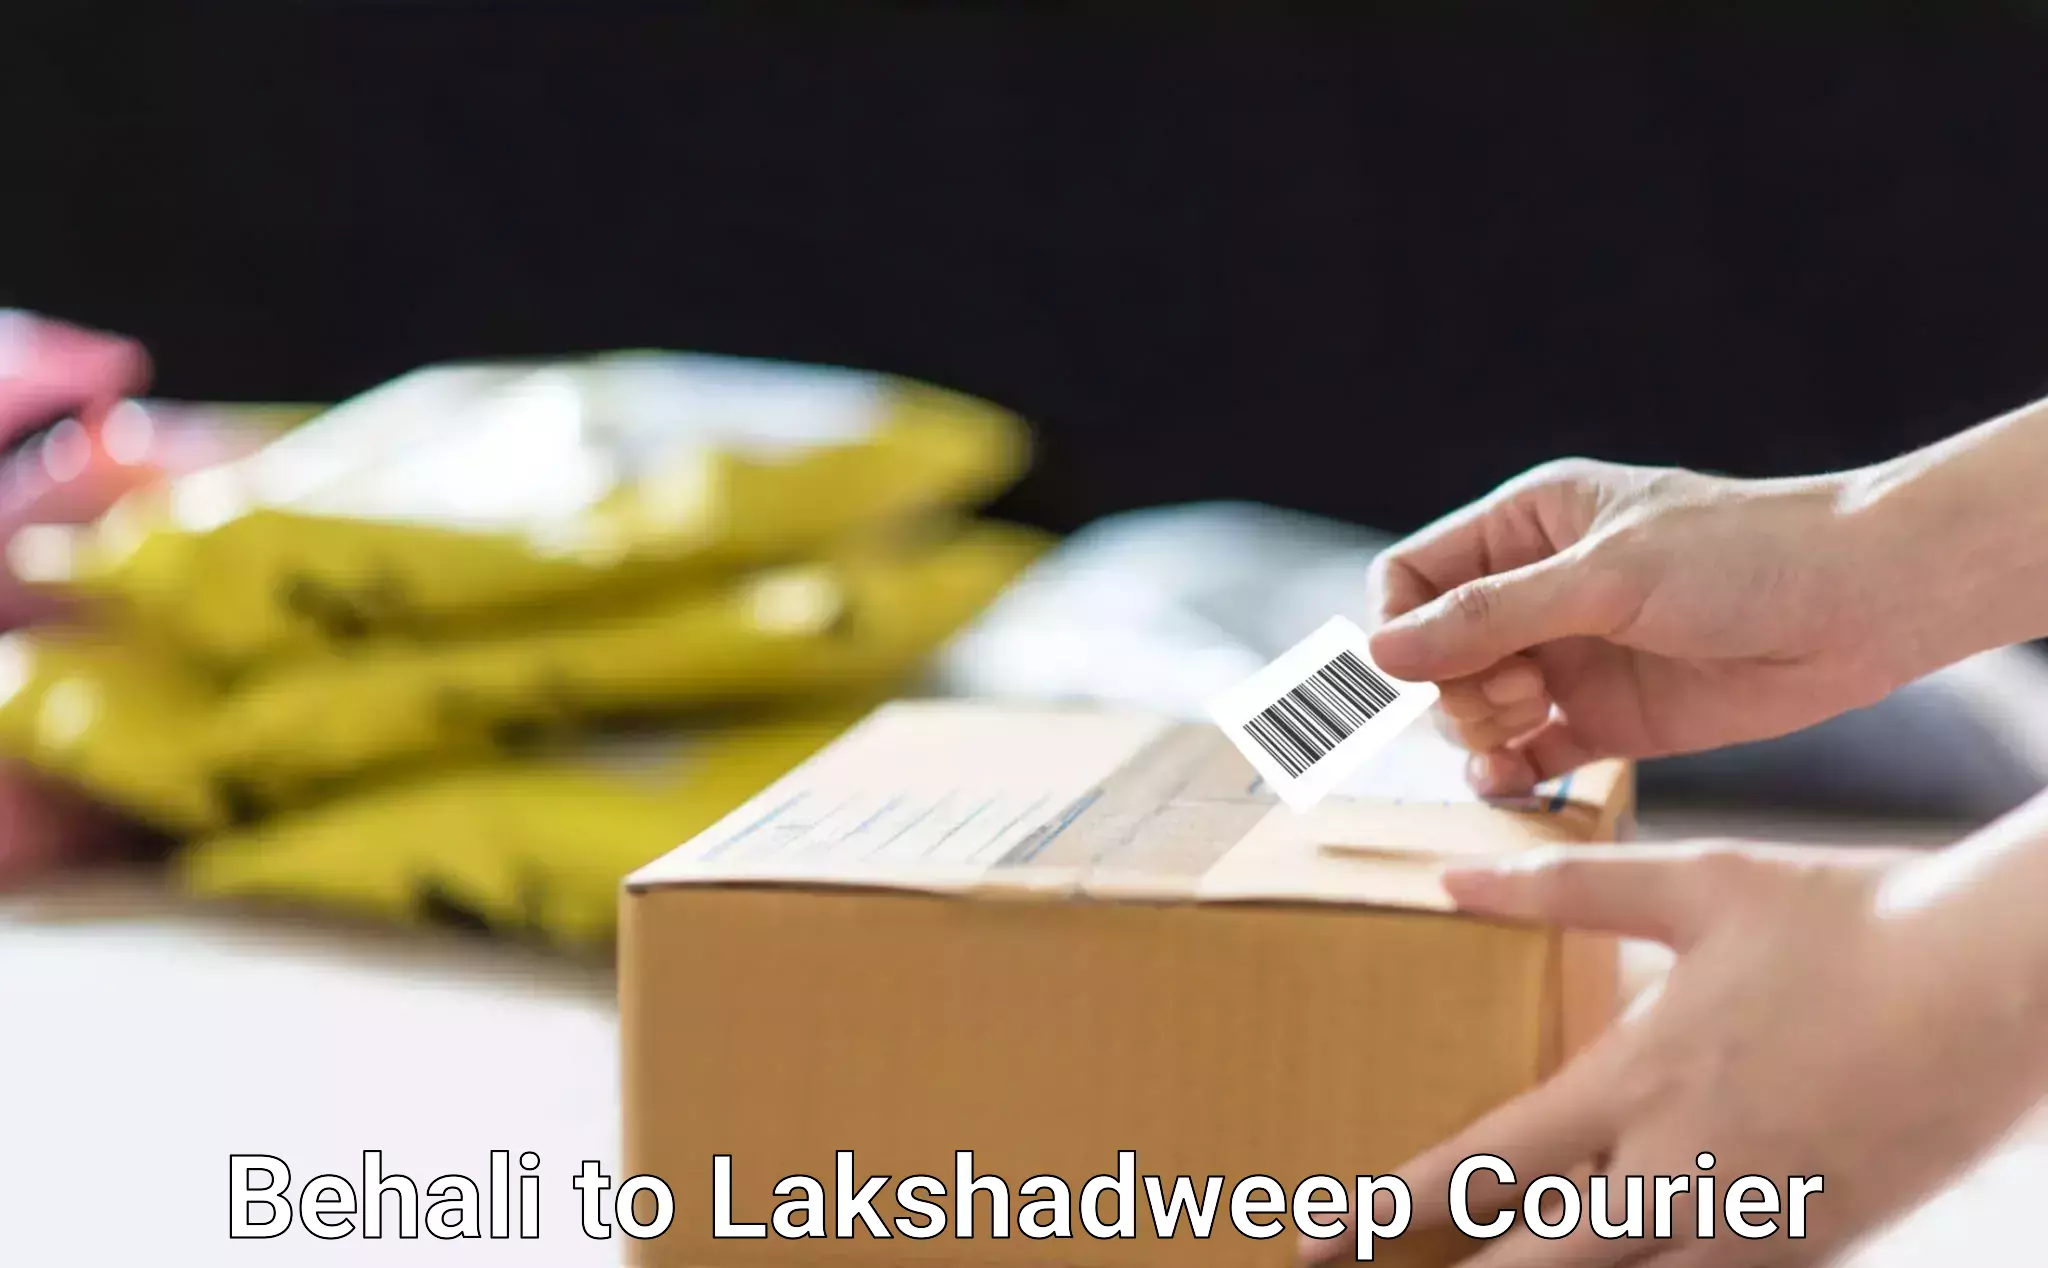 User-friendly courier app Behali to Lakshadweep